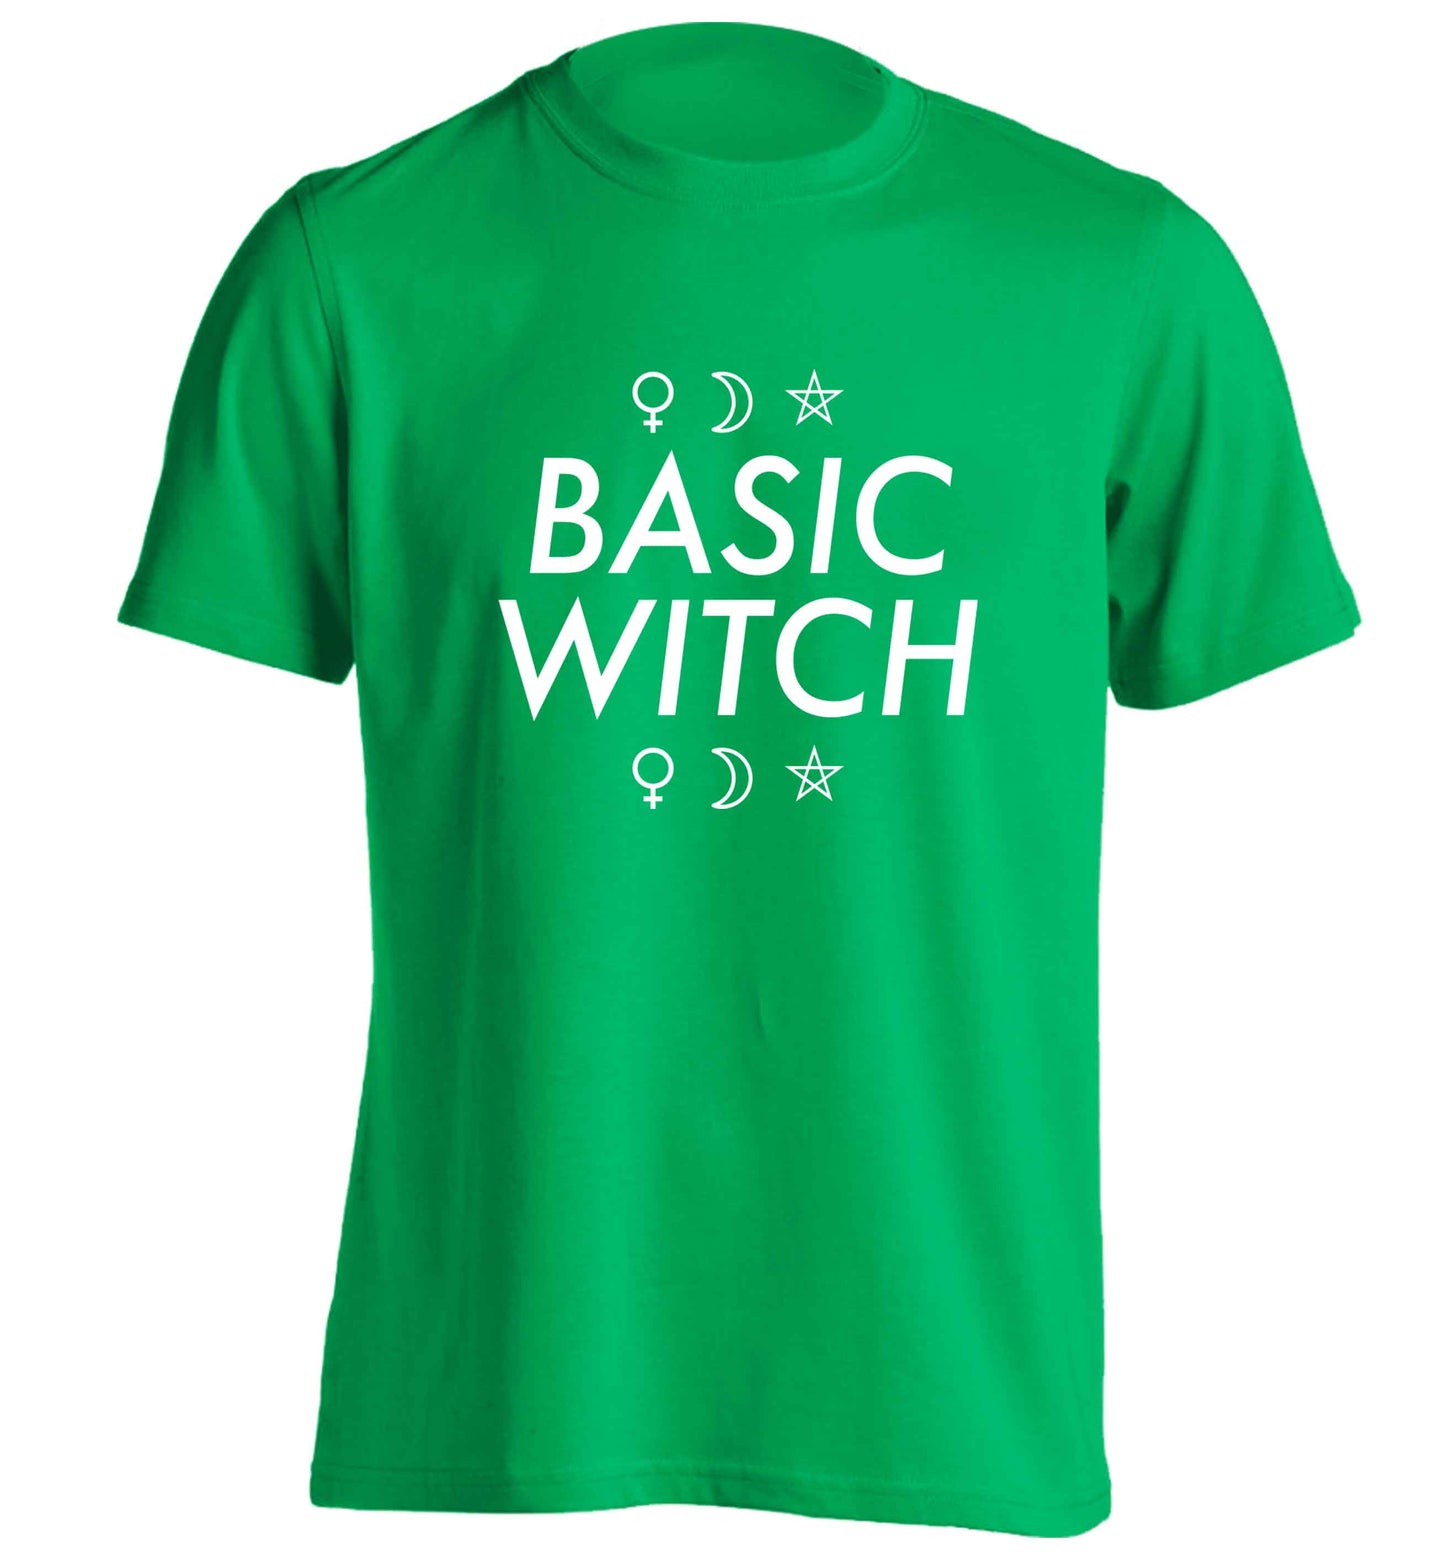 Basic witch 1 adults unisex green Tshirt 2XL